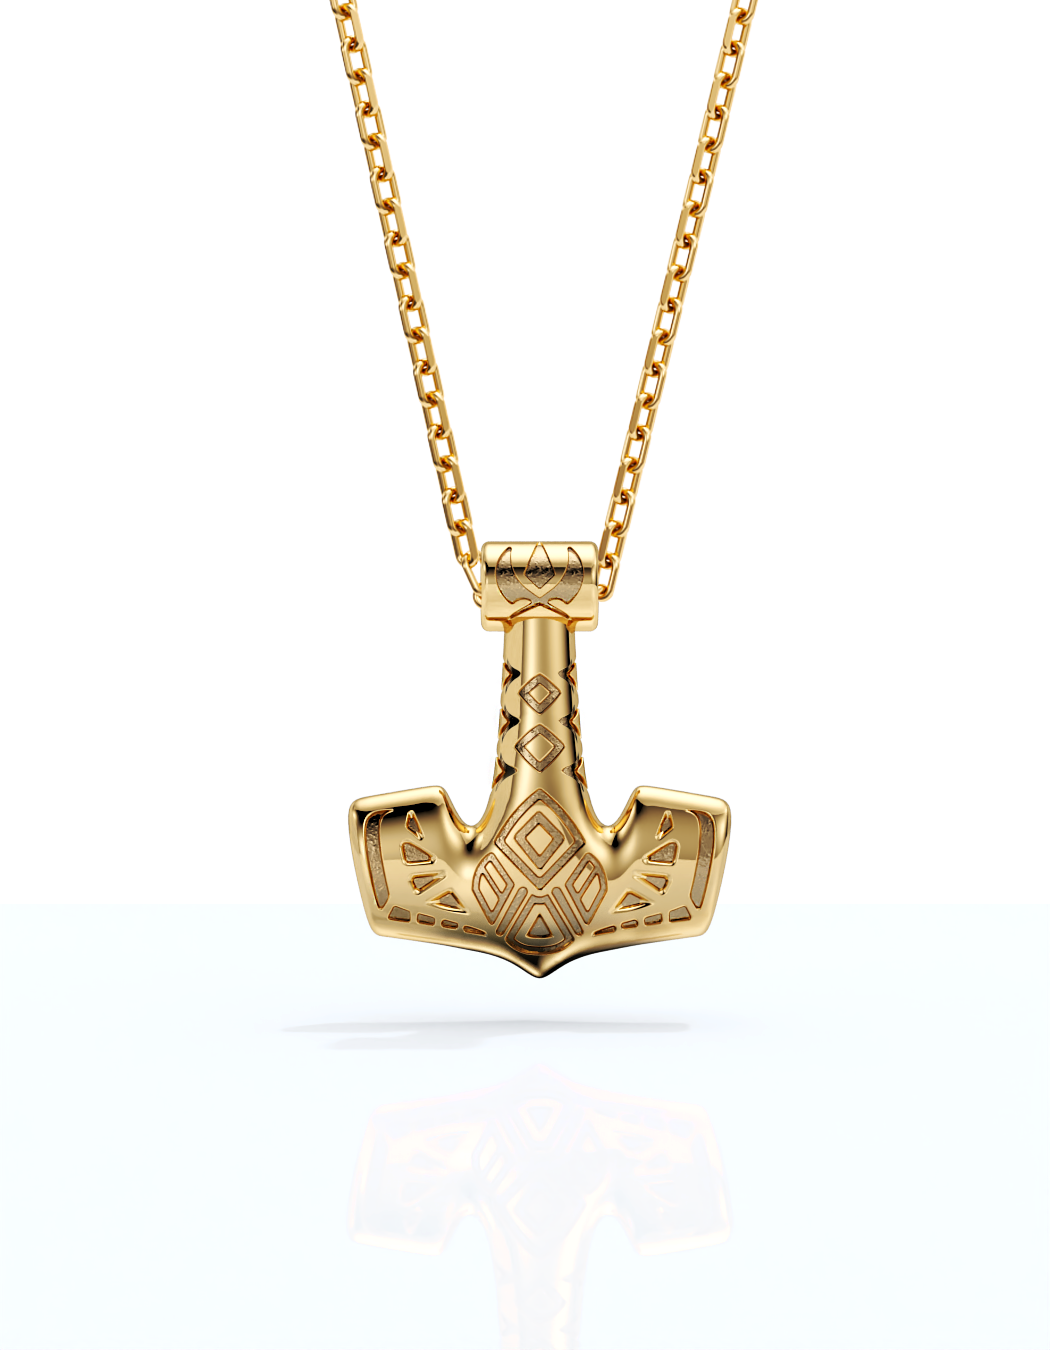 Rhino Hammer Necklace 14k Gold